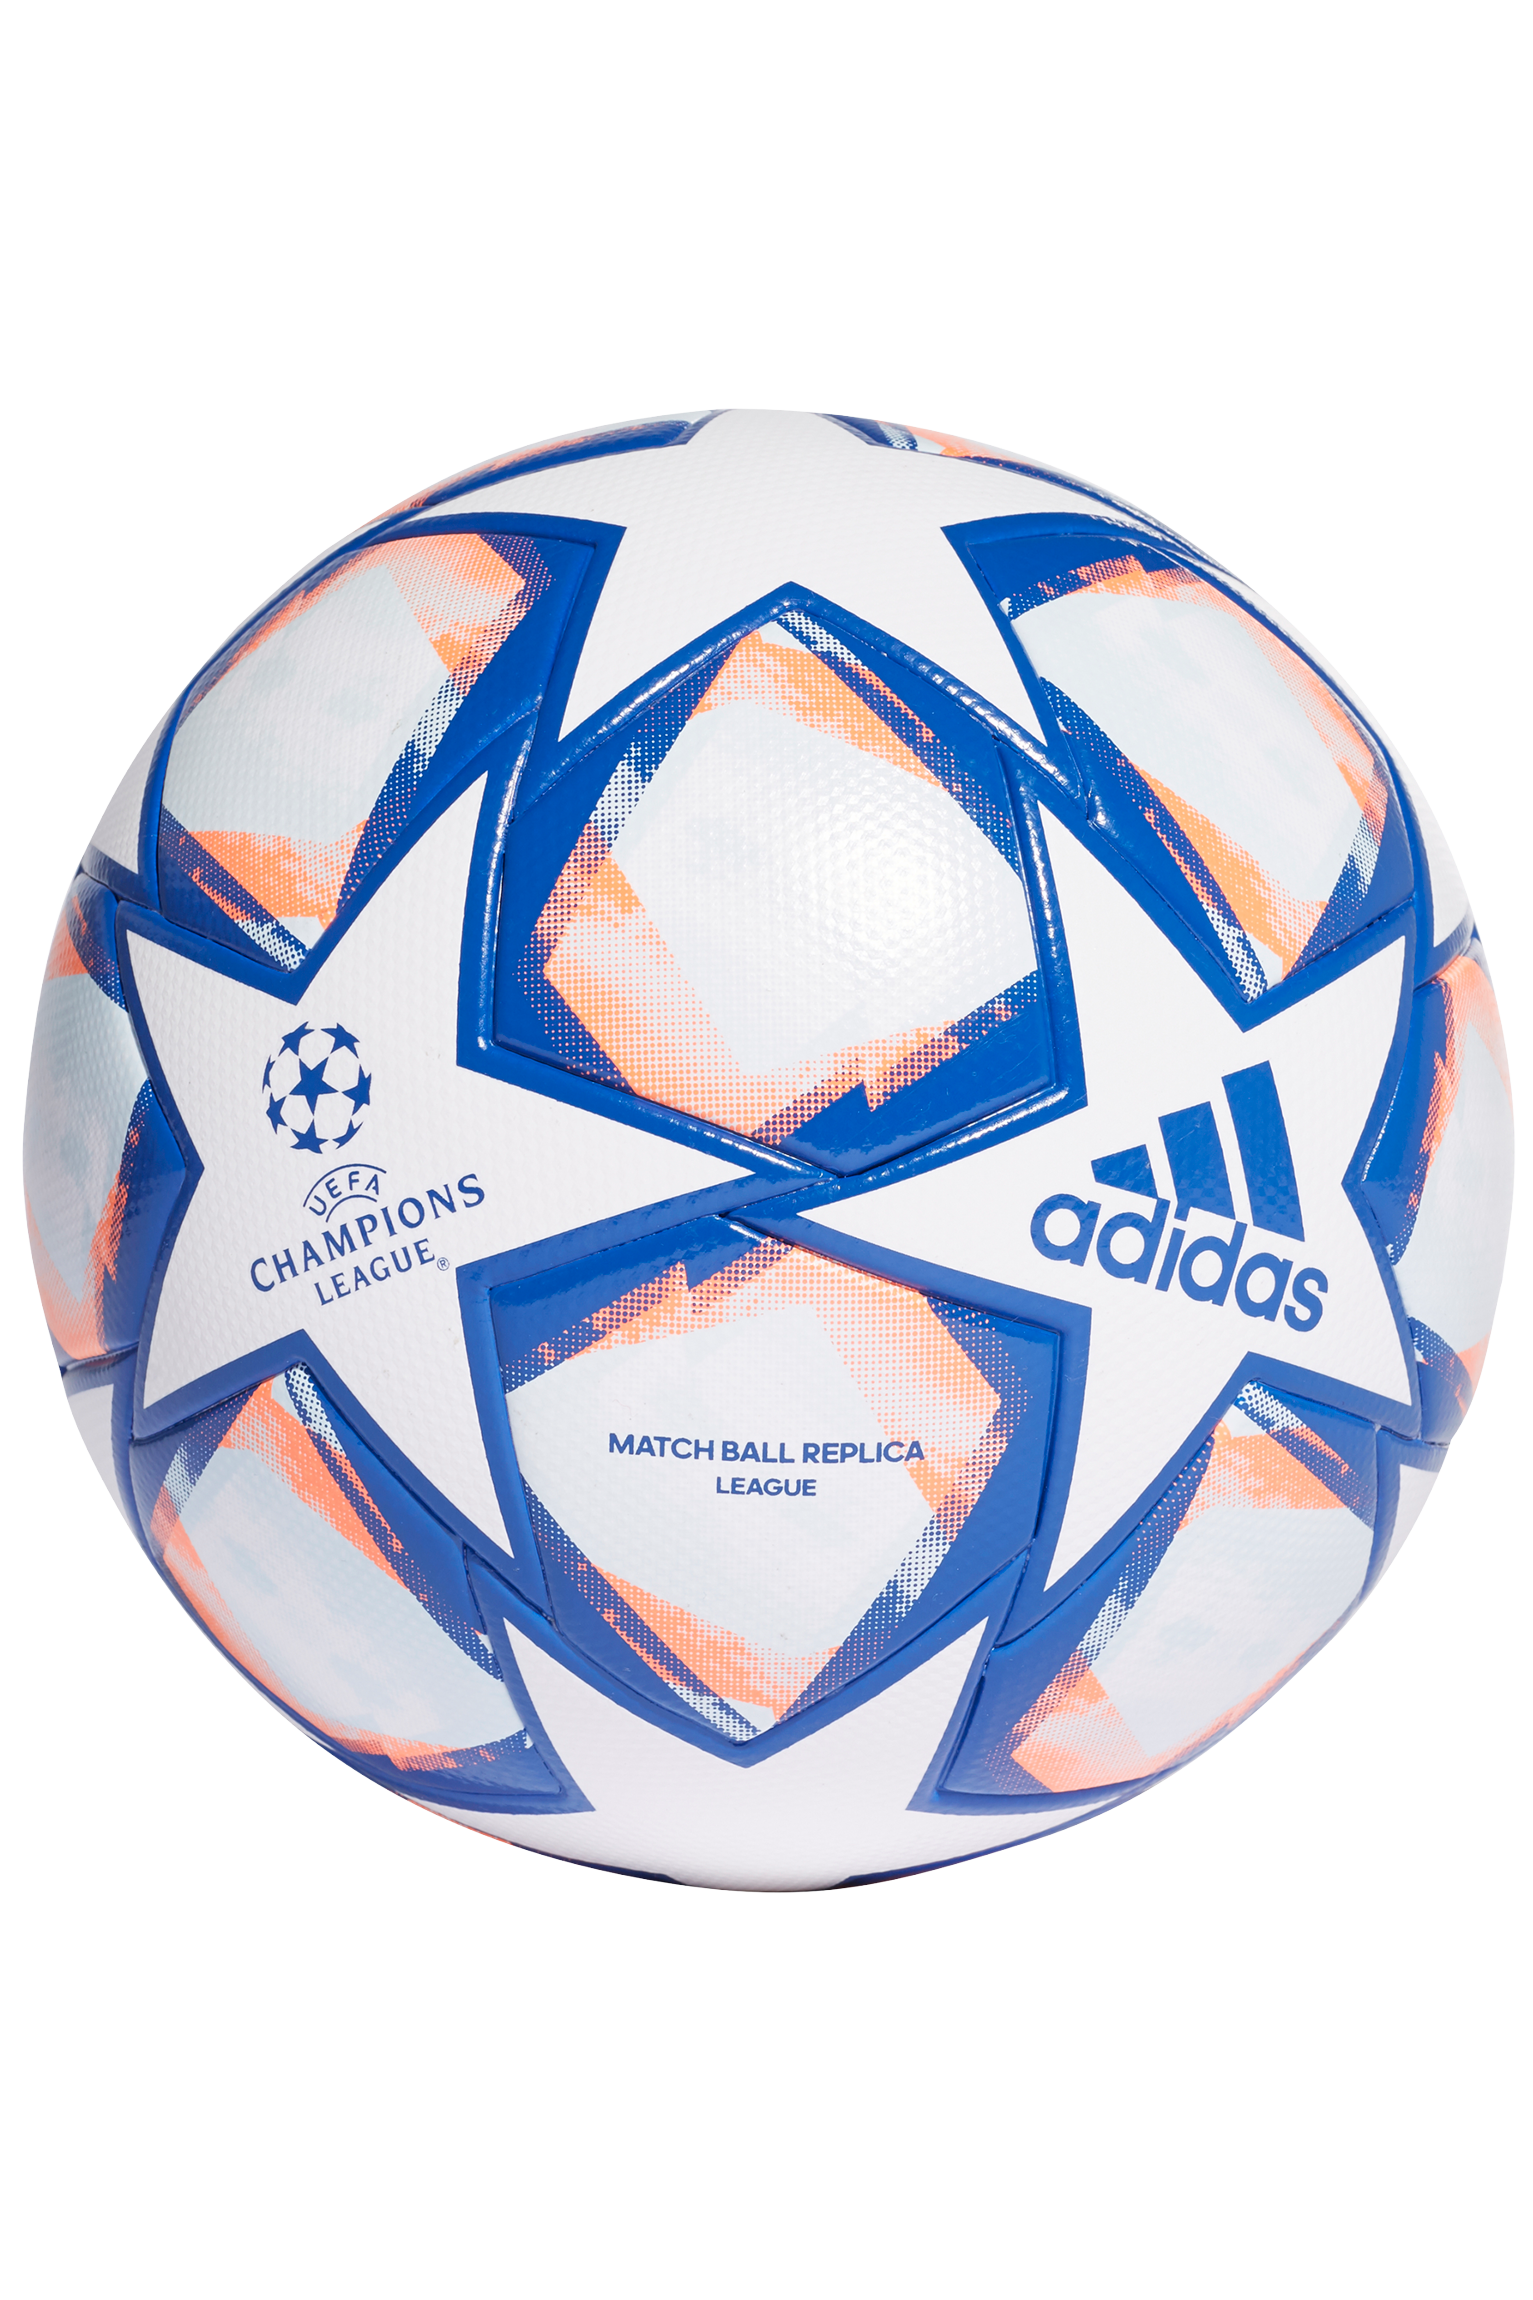 adidas champions league ball size 4